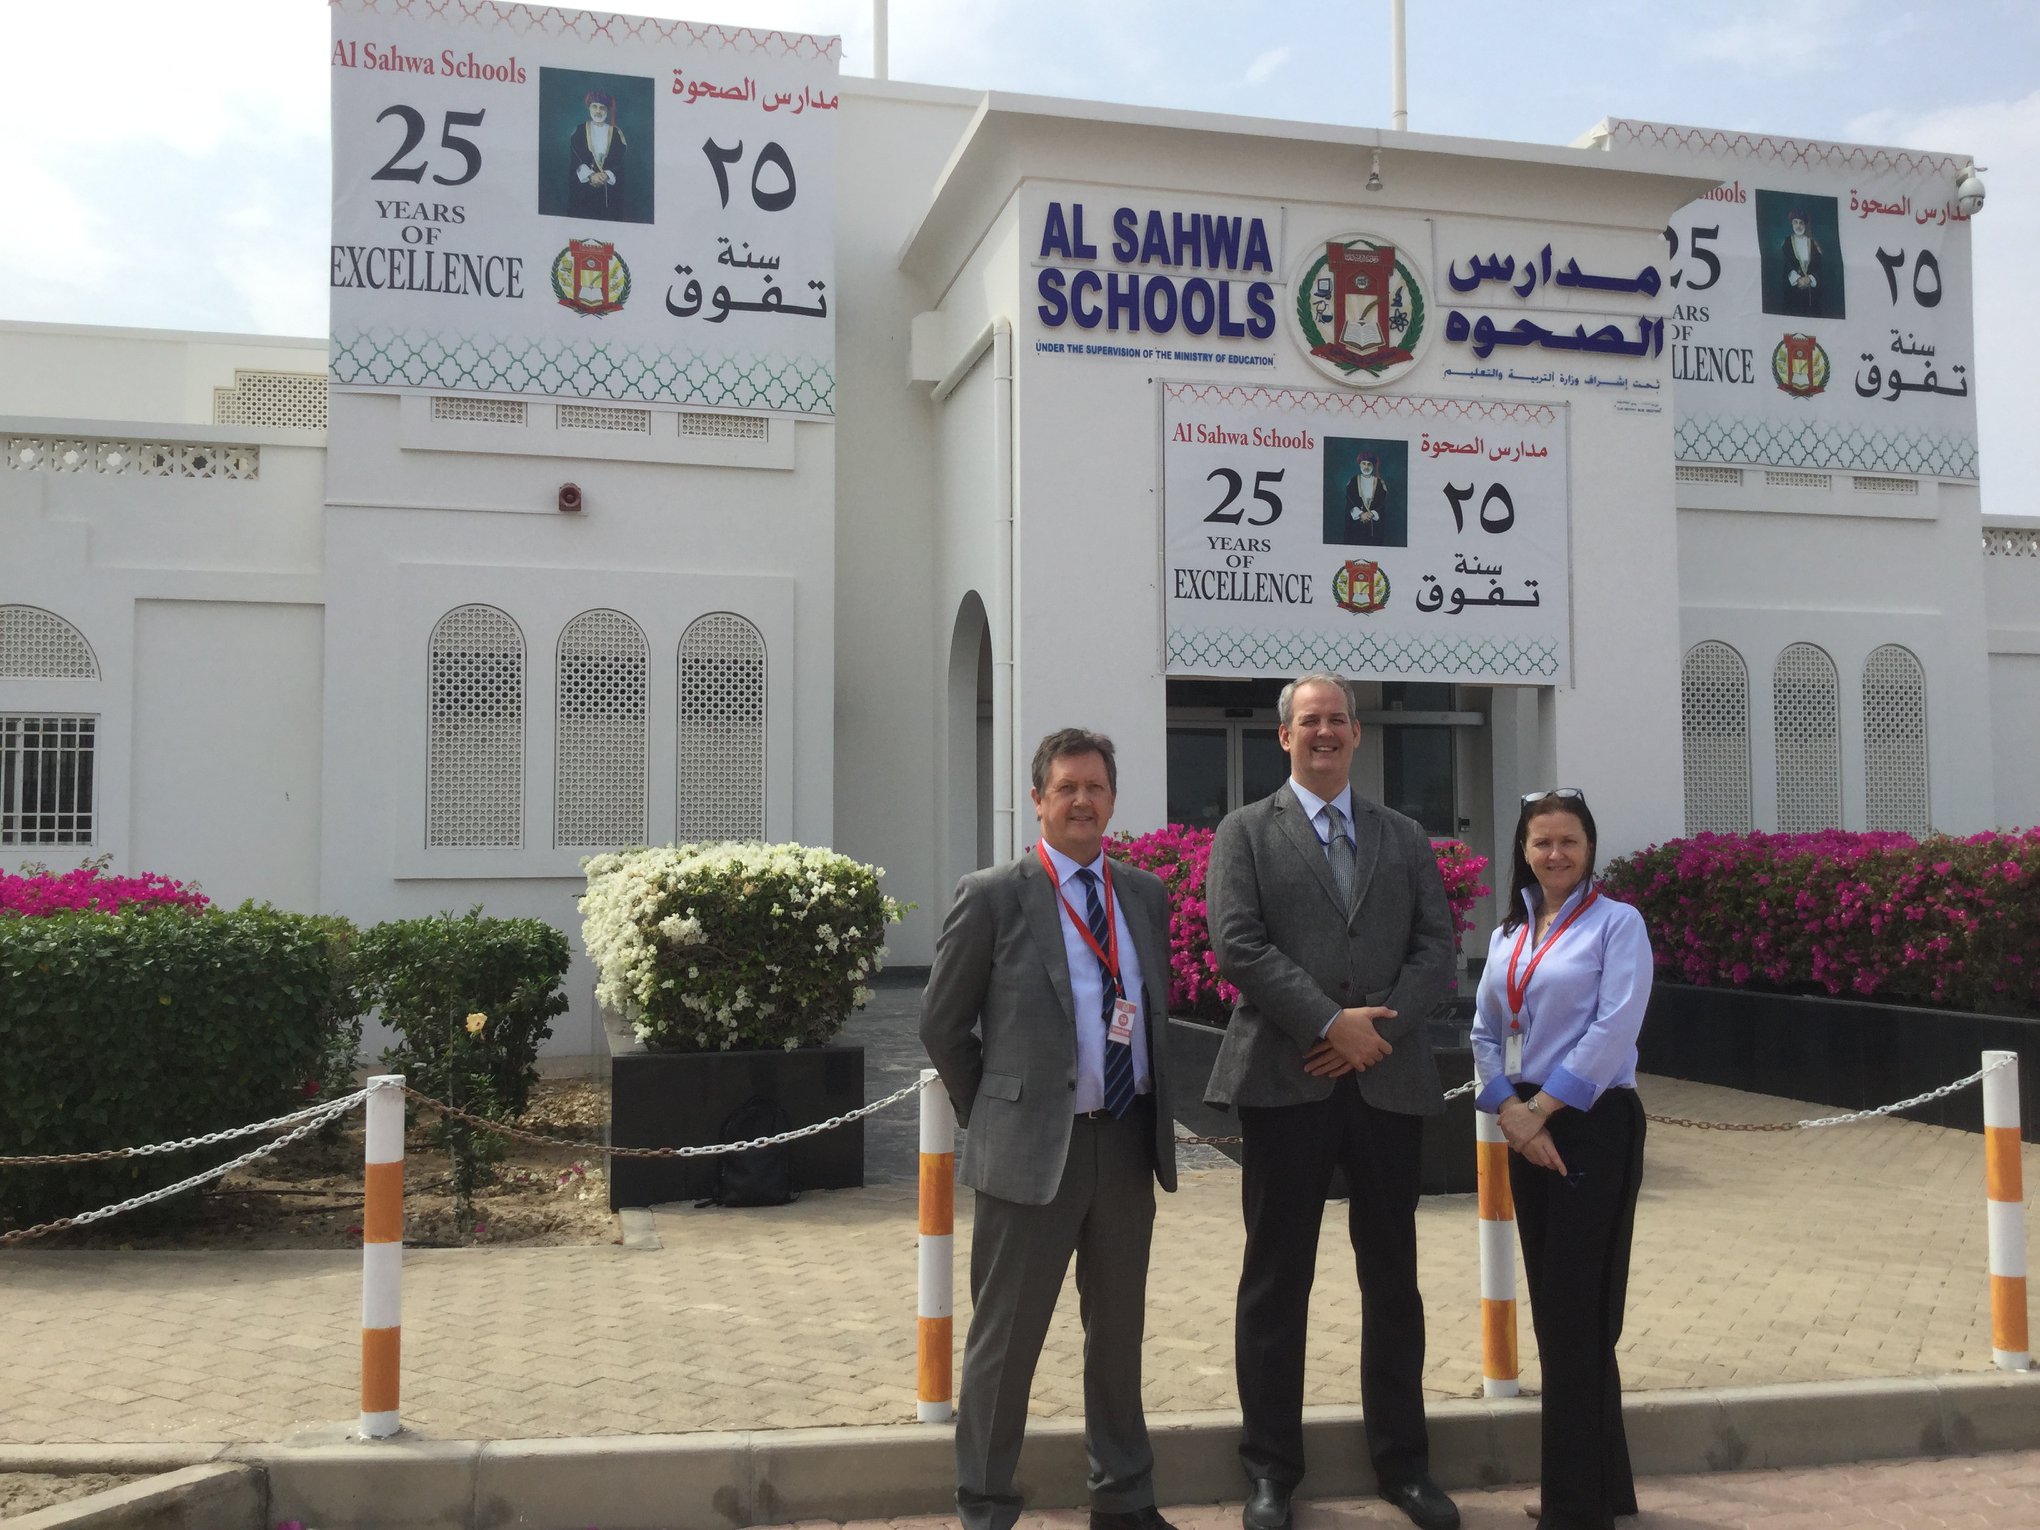 Bill Turner (L) and Alison Turner meet with Dr. Peter Coles, Director at Al Sahwa Schools